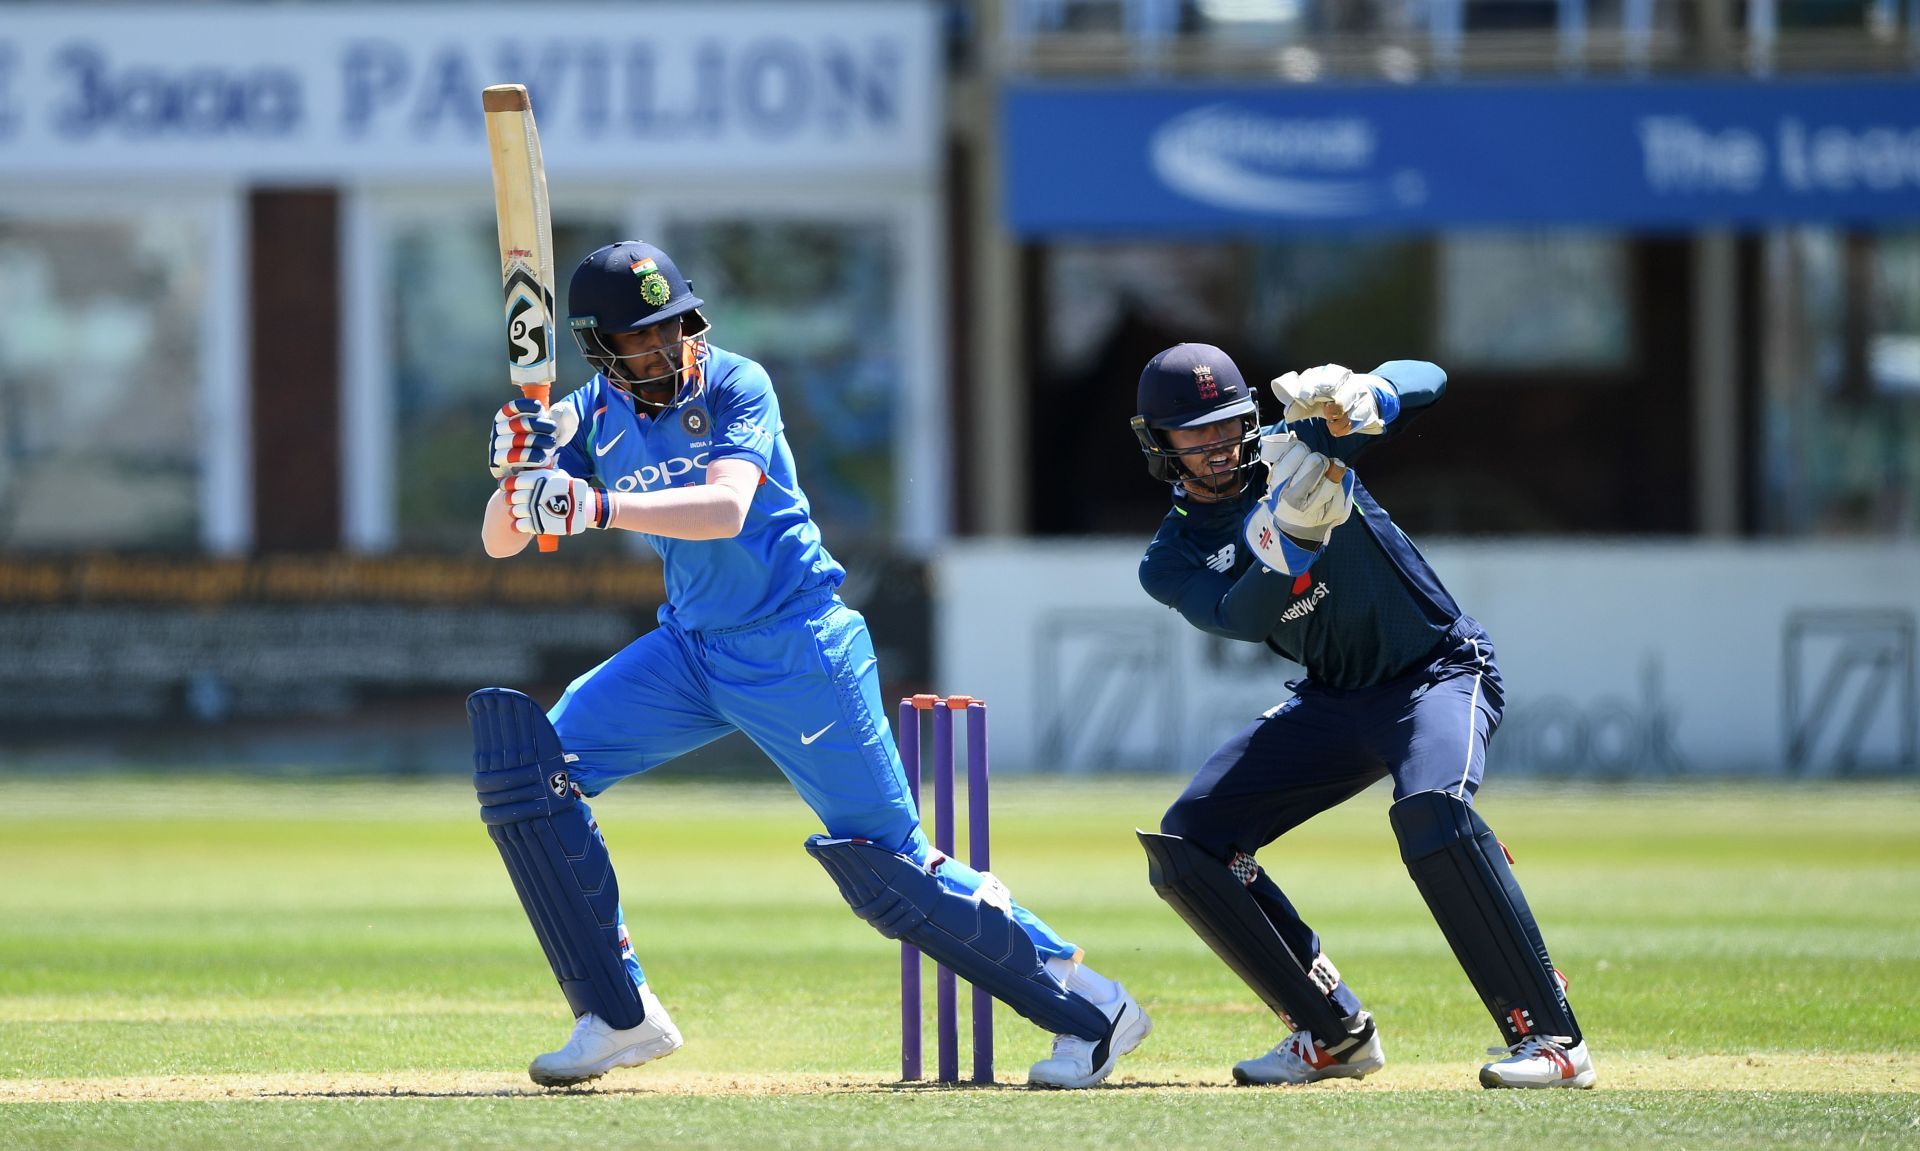 Krishnappa Gowtham scored two runs on his ODI debut. (Image: Getty)